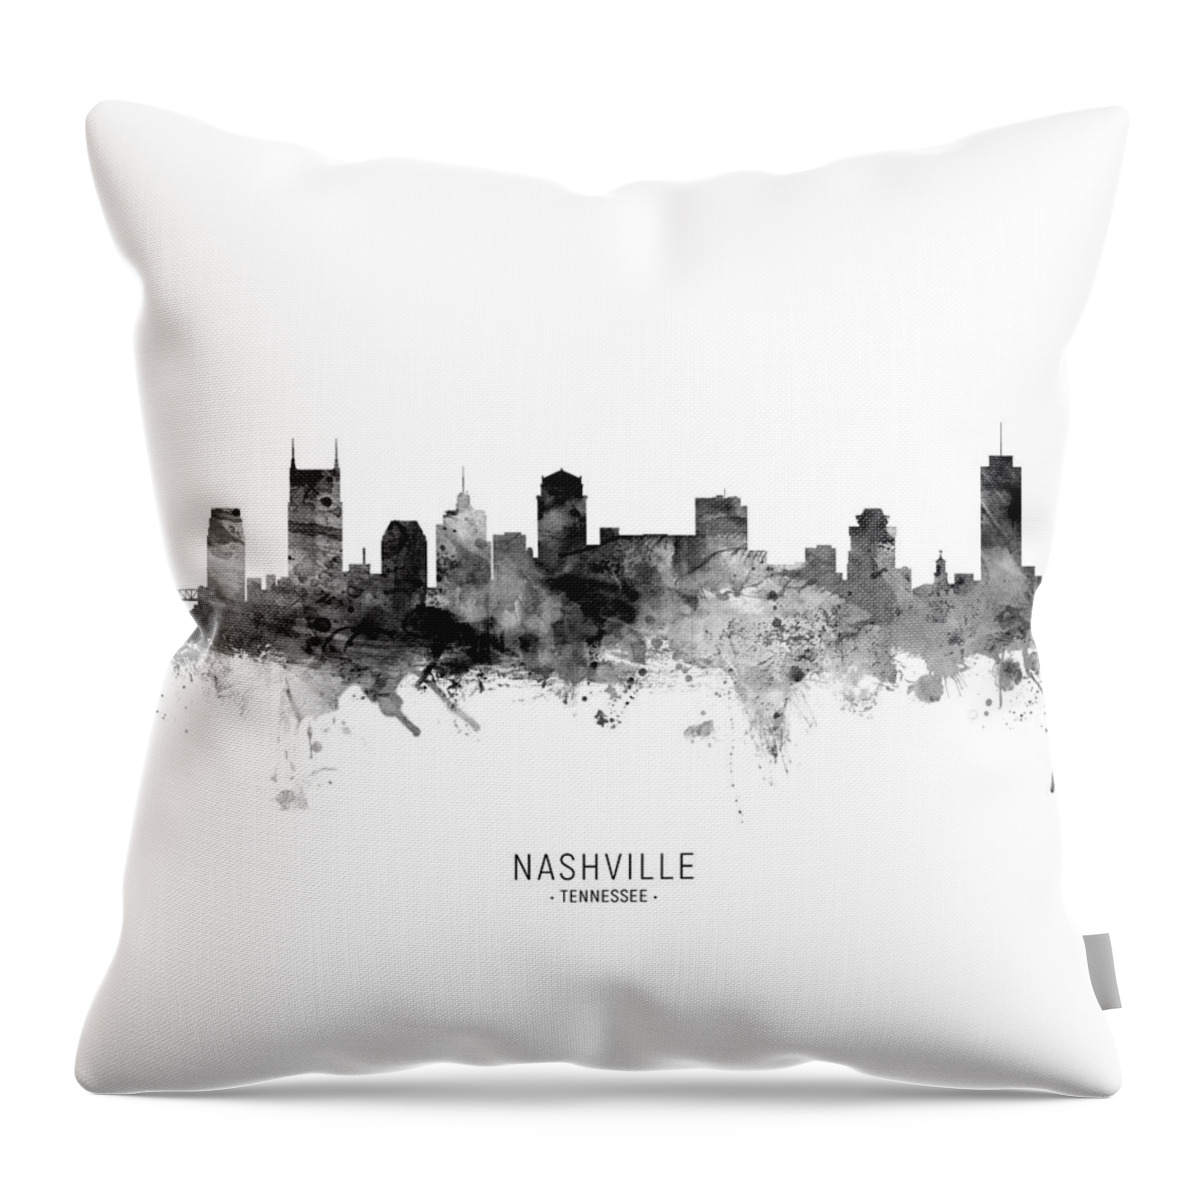 Nashville Throw Pillow featuring the digital art Nashville Tennessee Skyline #21 by Michael Tompsett